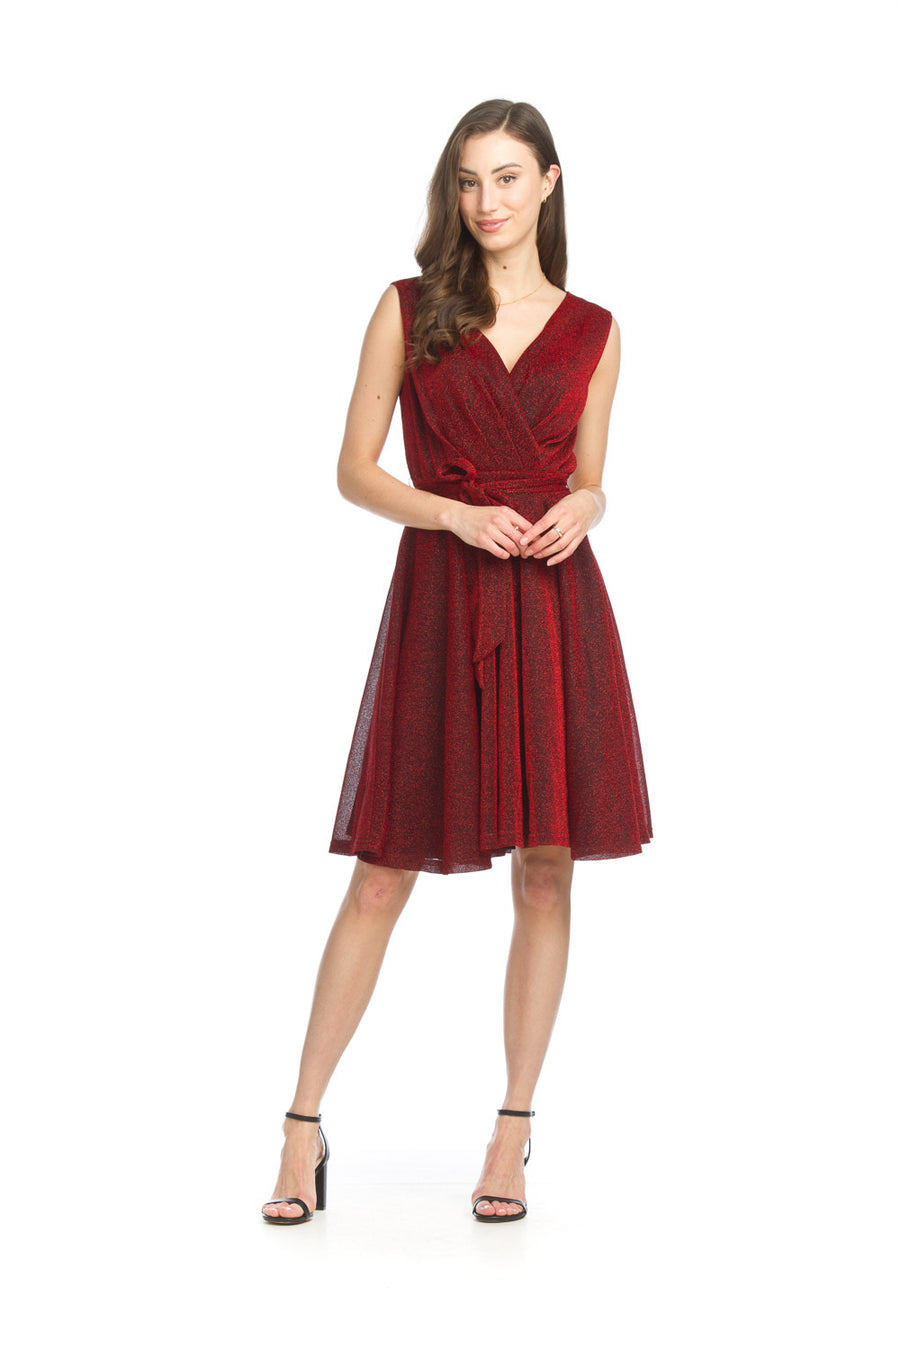 Papillon PD-15519 Sparkle Stretch Wrap Dress - Red